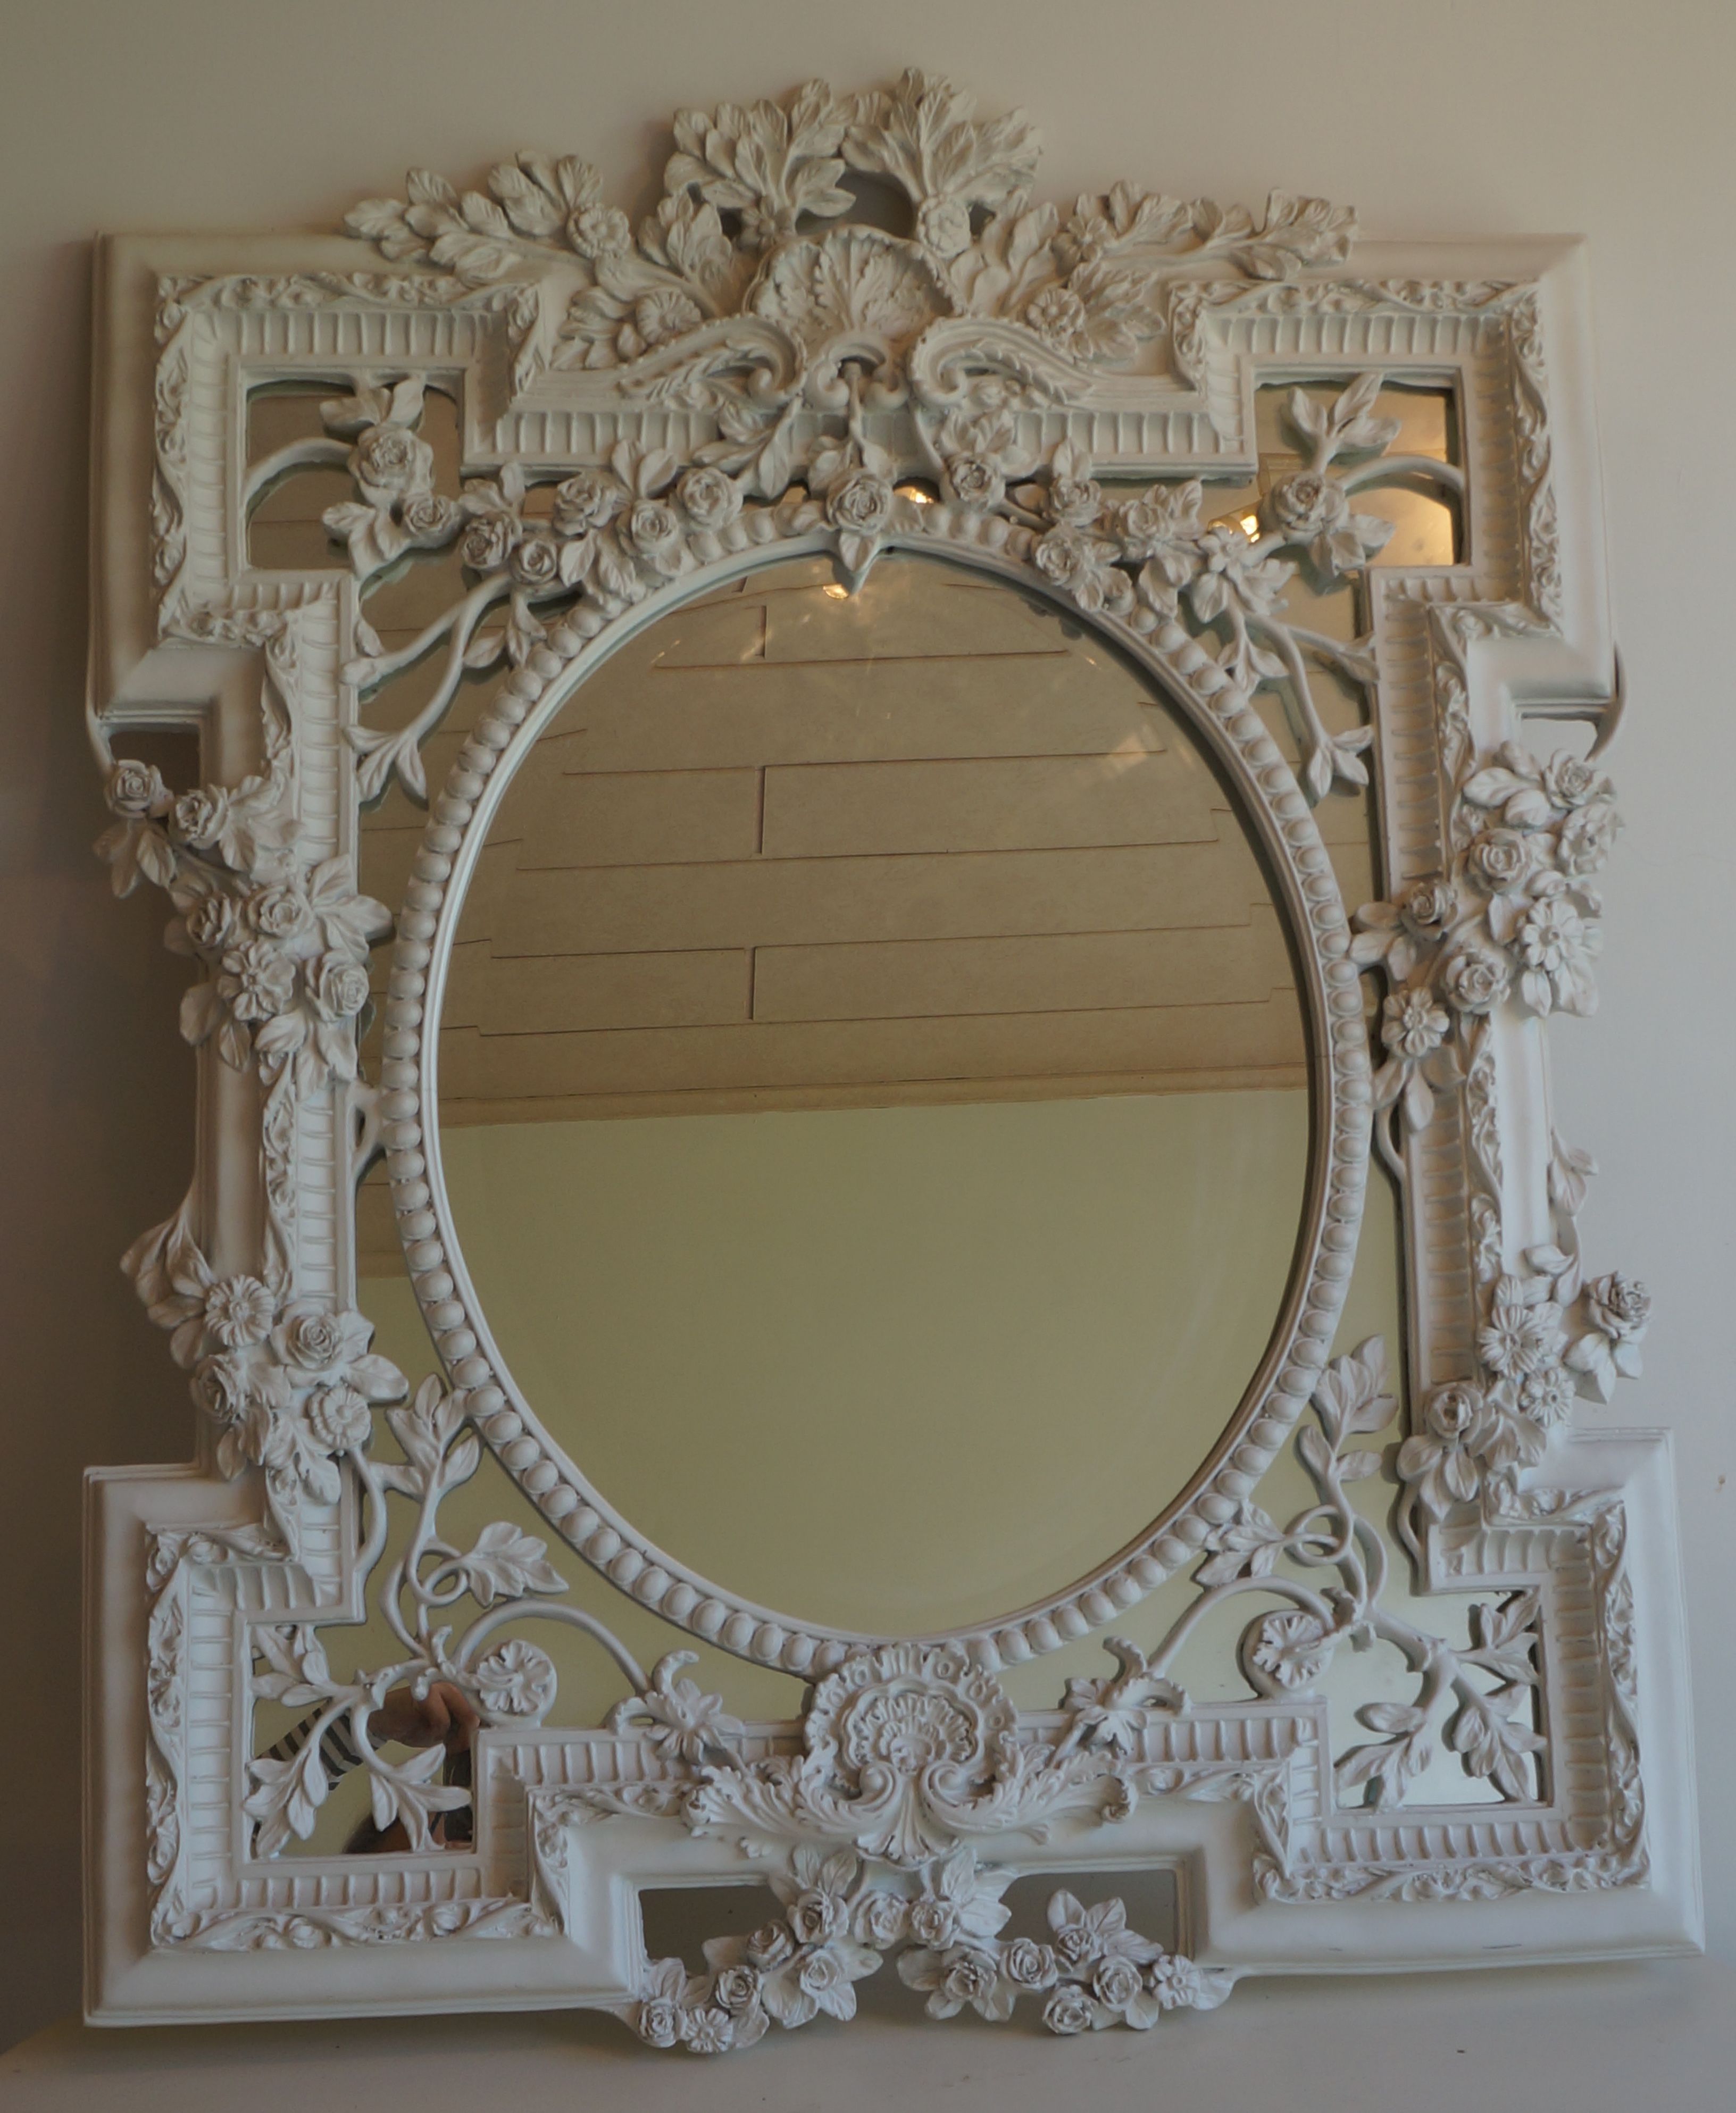 Decorating With Large Mirrors » Arthatravel.com